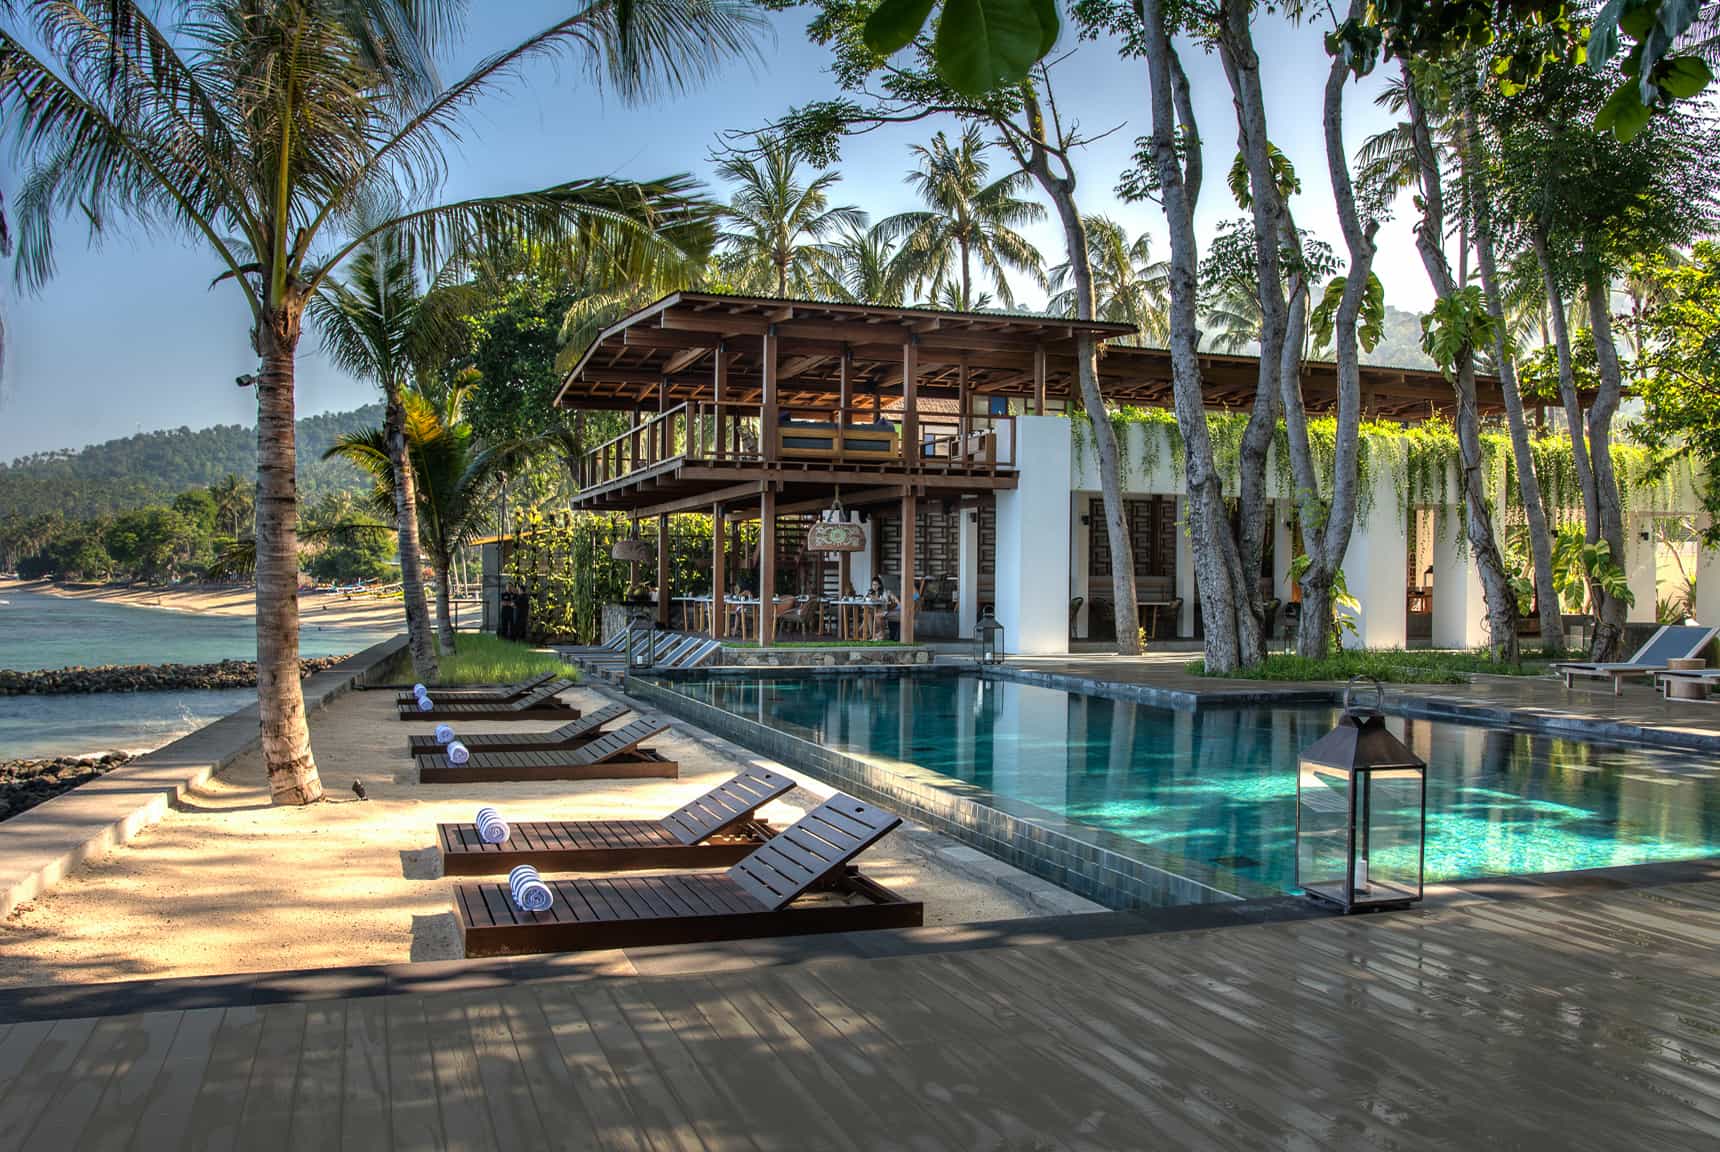 Jeeva Santai - Mangsit, Lombok Indonesia (Bali hotel photography by master photographer Rick Carmichael of LuxViz)